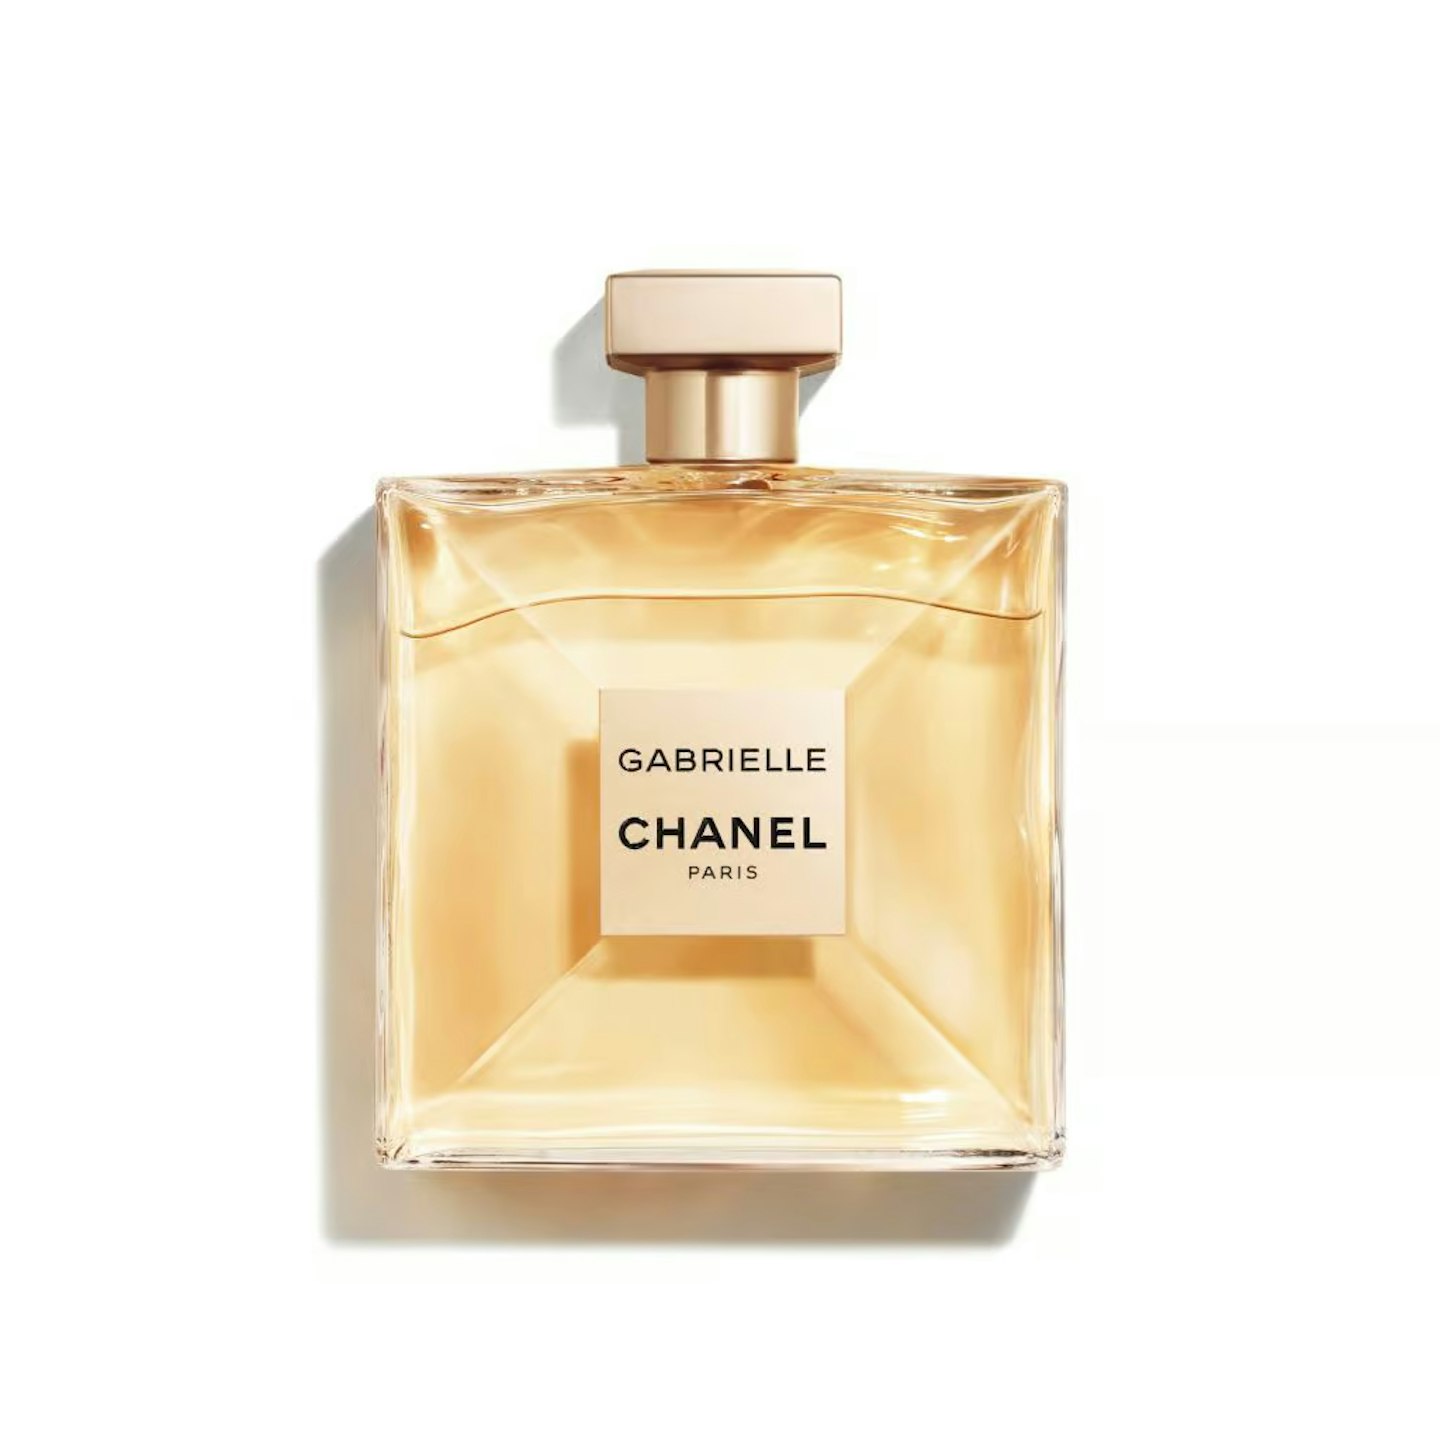 Coco Chanel: Perfume & Cosmetics